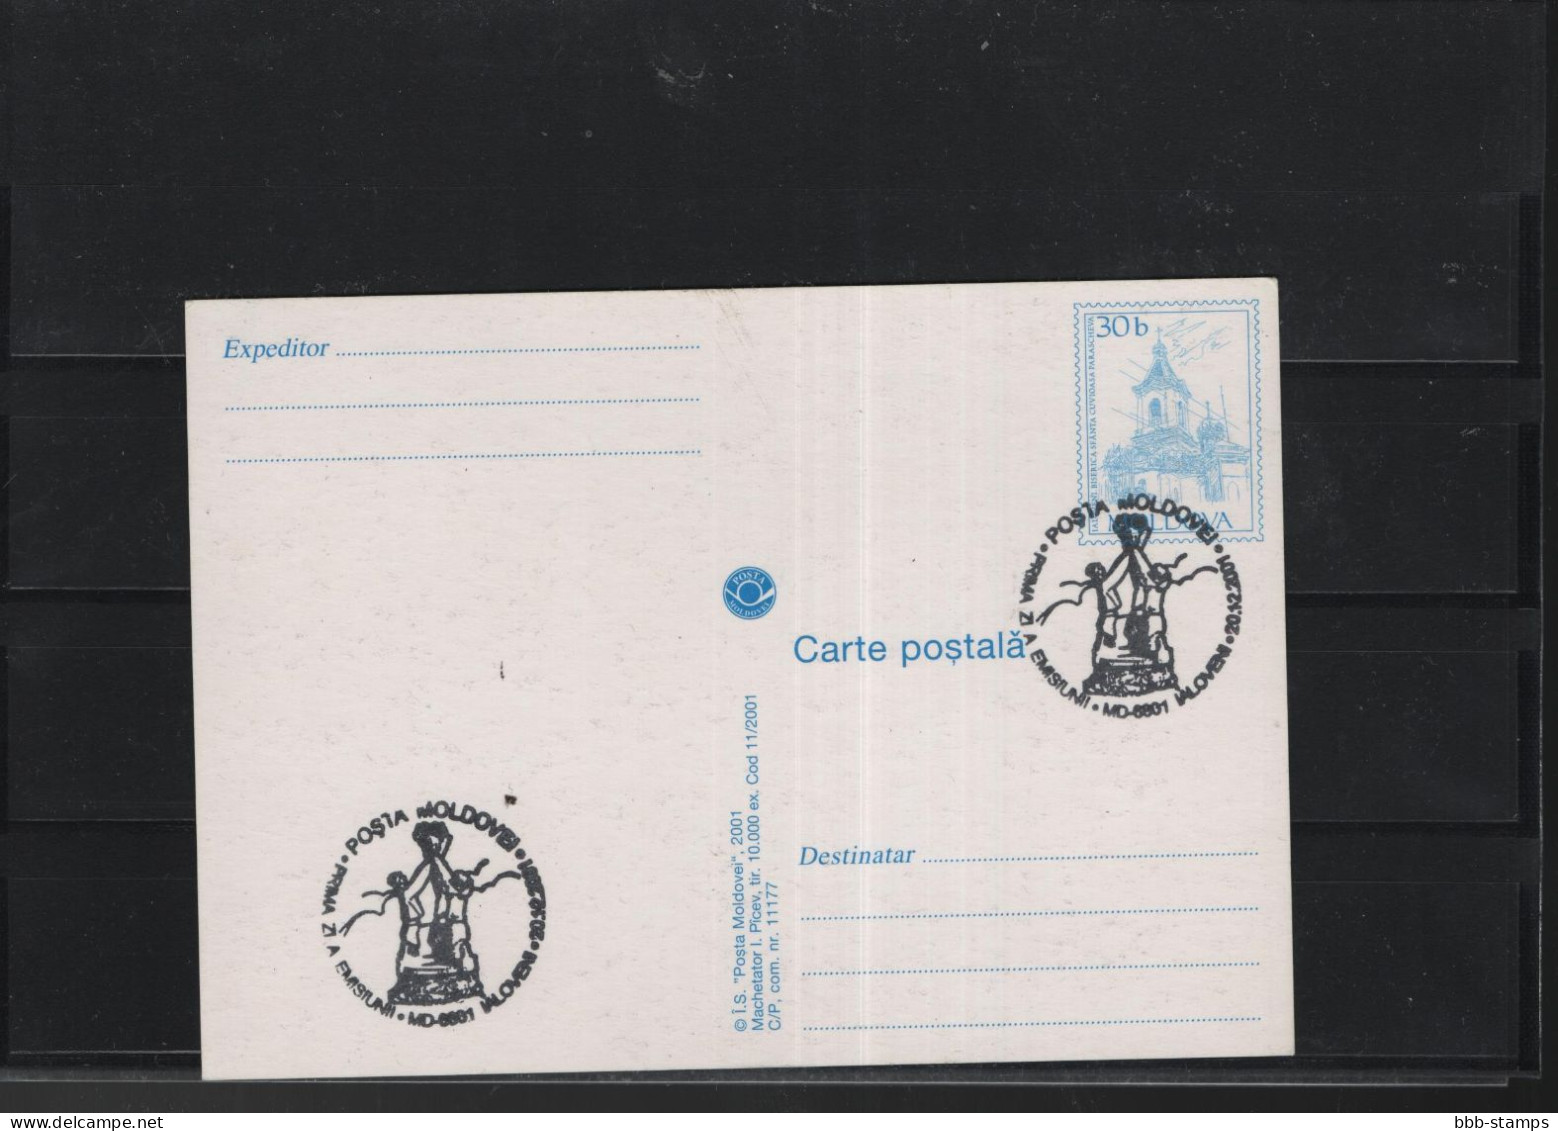 Moldavien Michel Cat.No. Postal Stat  Card Issued  20.12.2001 - Moldavie